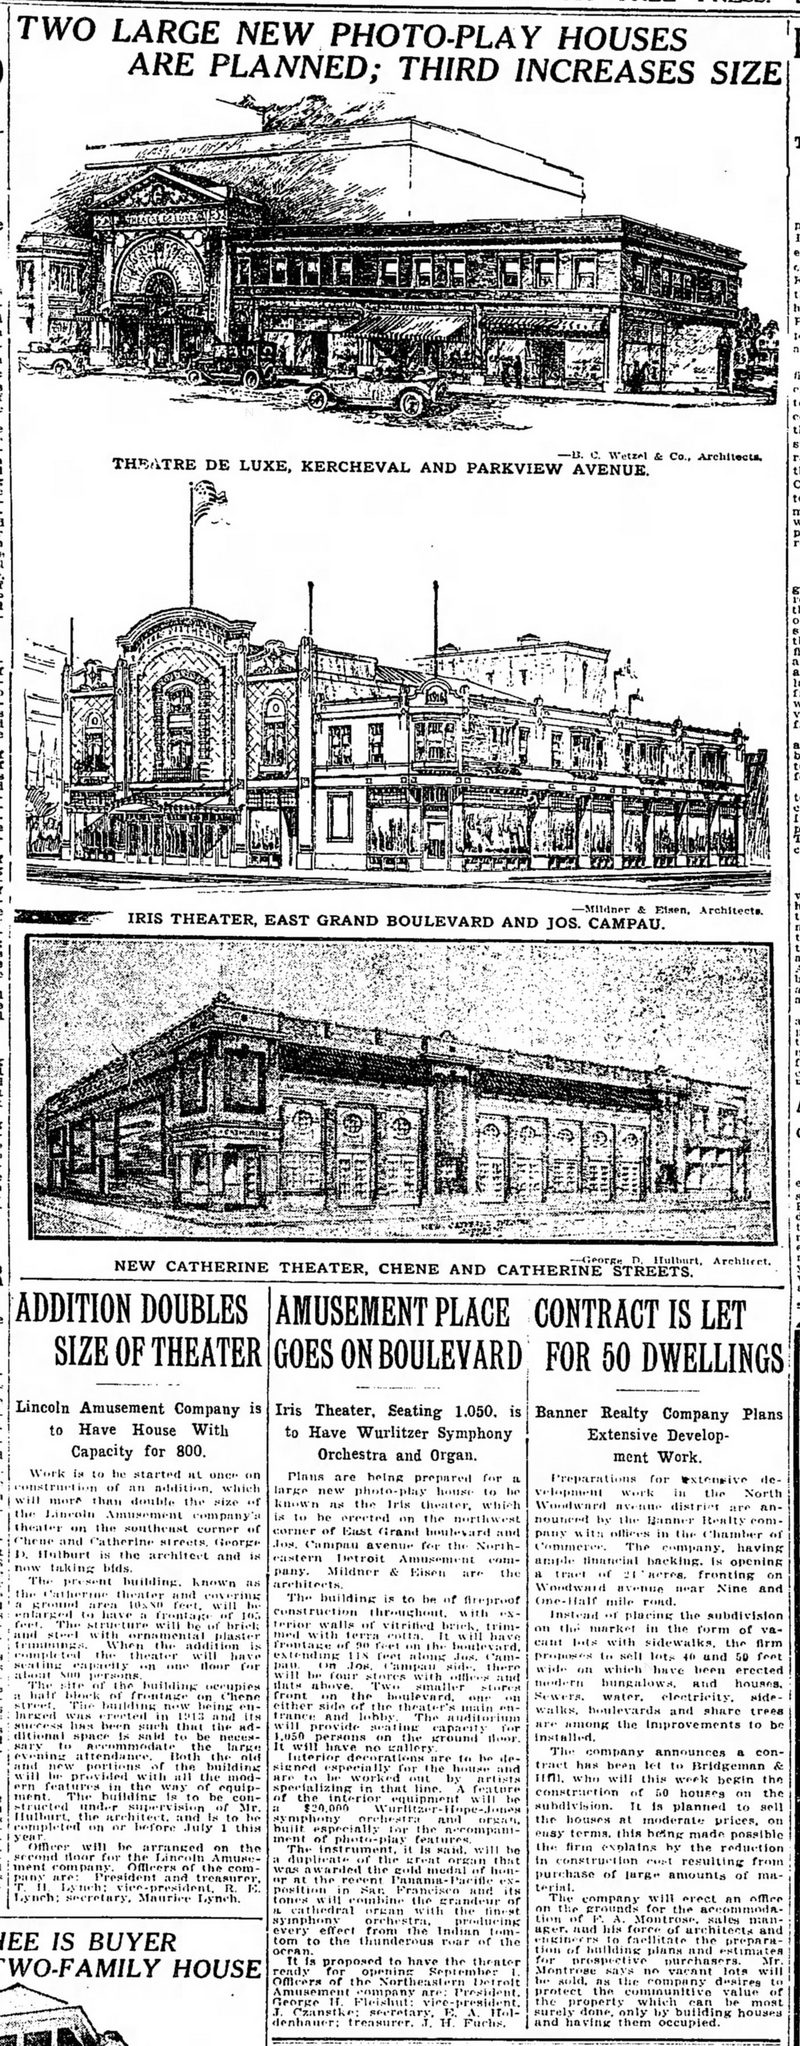 Catherine Theatre - Mar 19 1916 Article